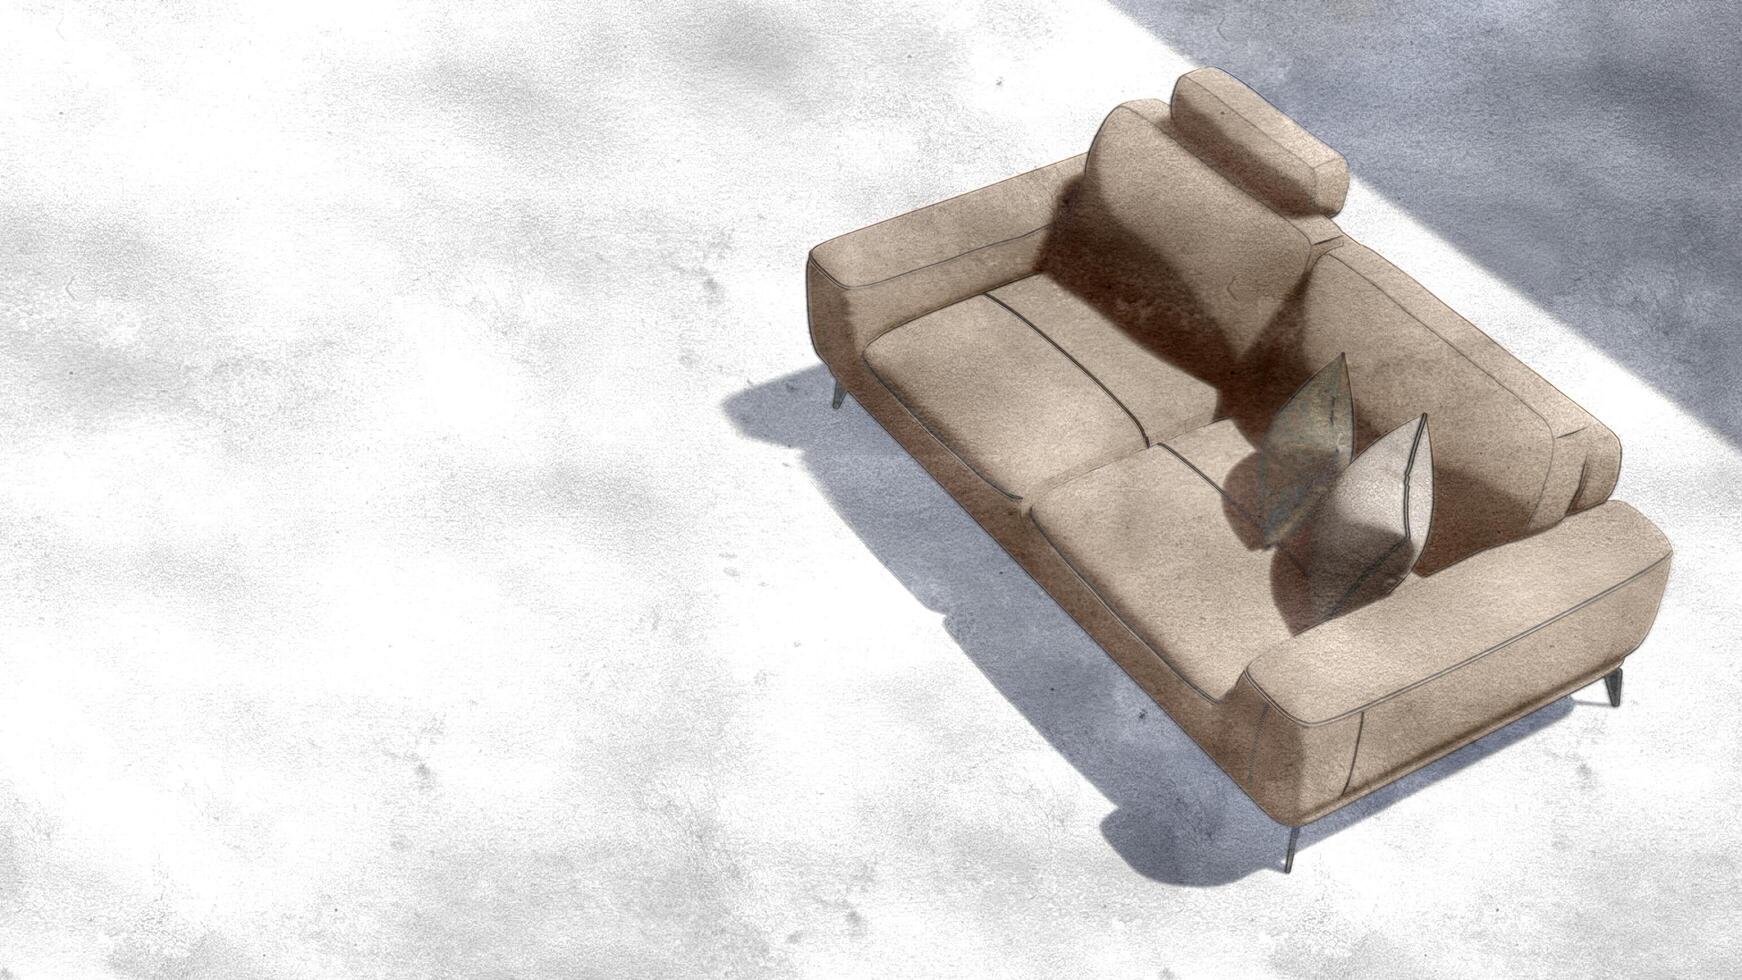 3d rendering sofa photo